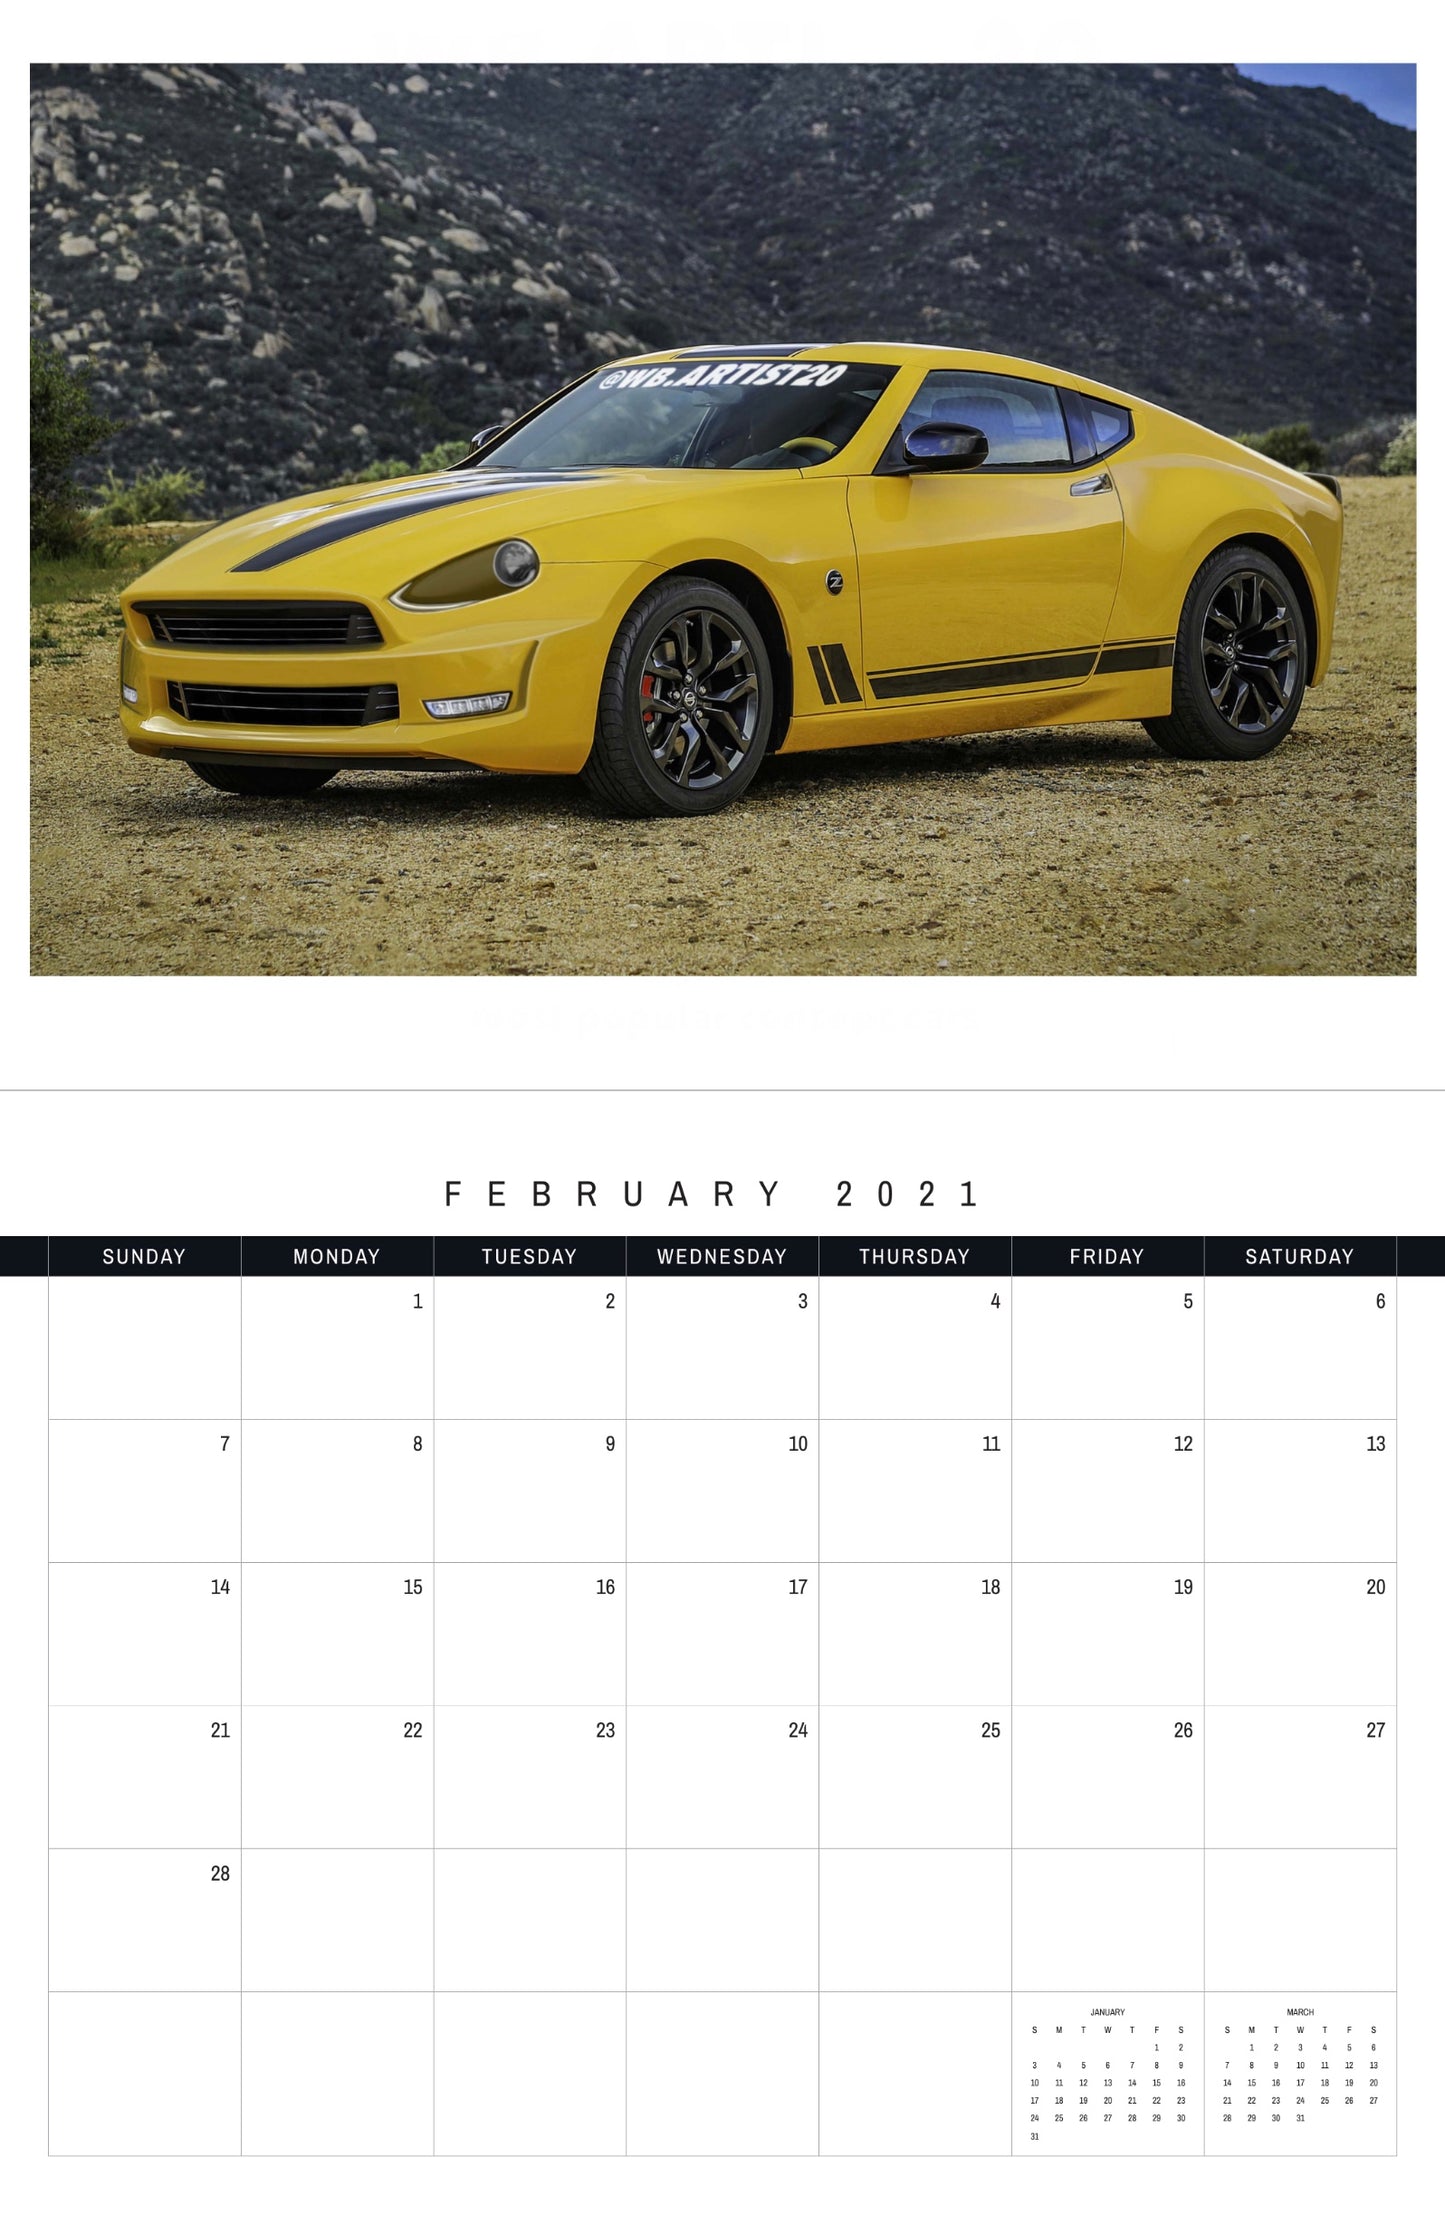 Import 2021 Calendar by WB.Artist20